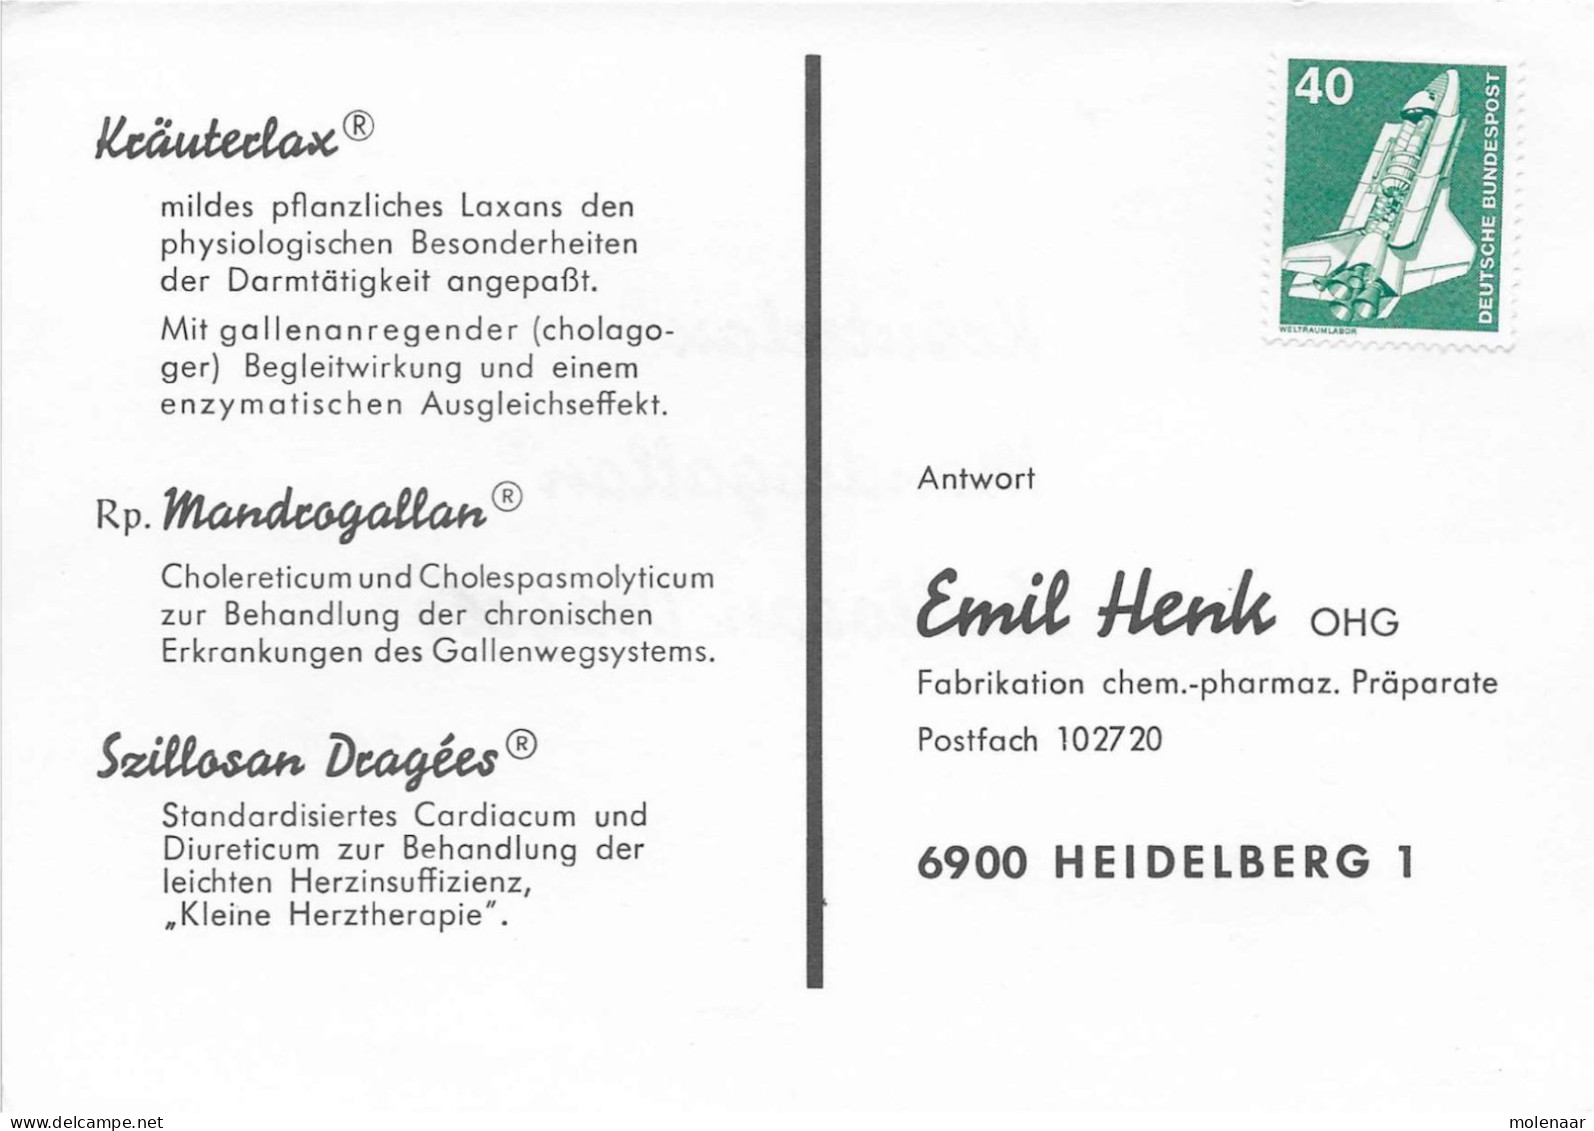 Postzegels > Europa > Duitsland > West-Duitsland > 1970-1979 > Kaart Met No. 850 (17309) - Briefe U. Dokumente